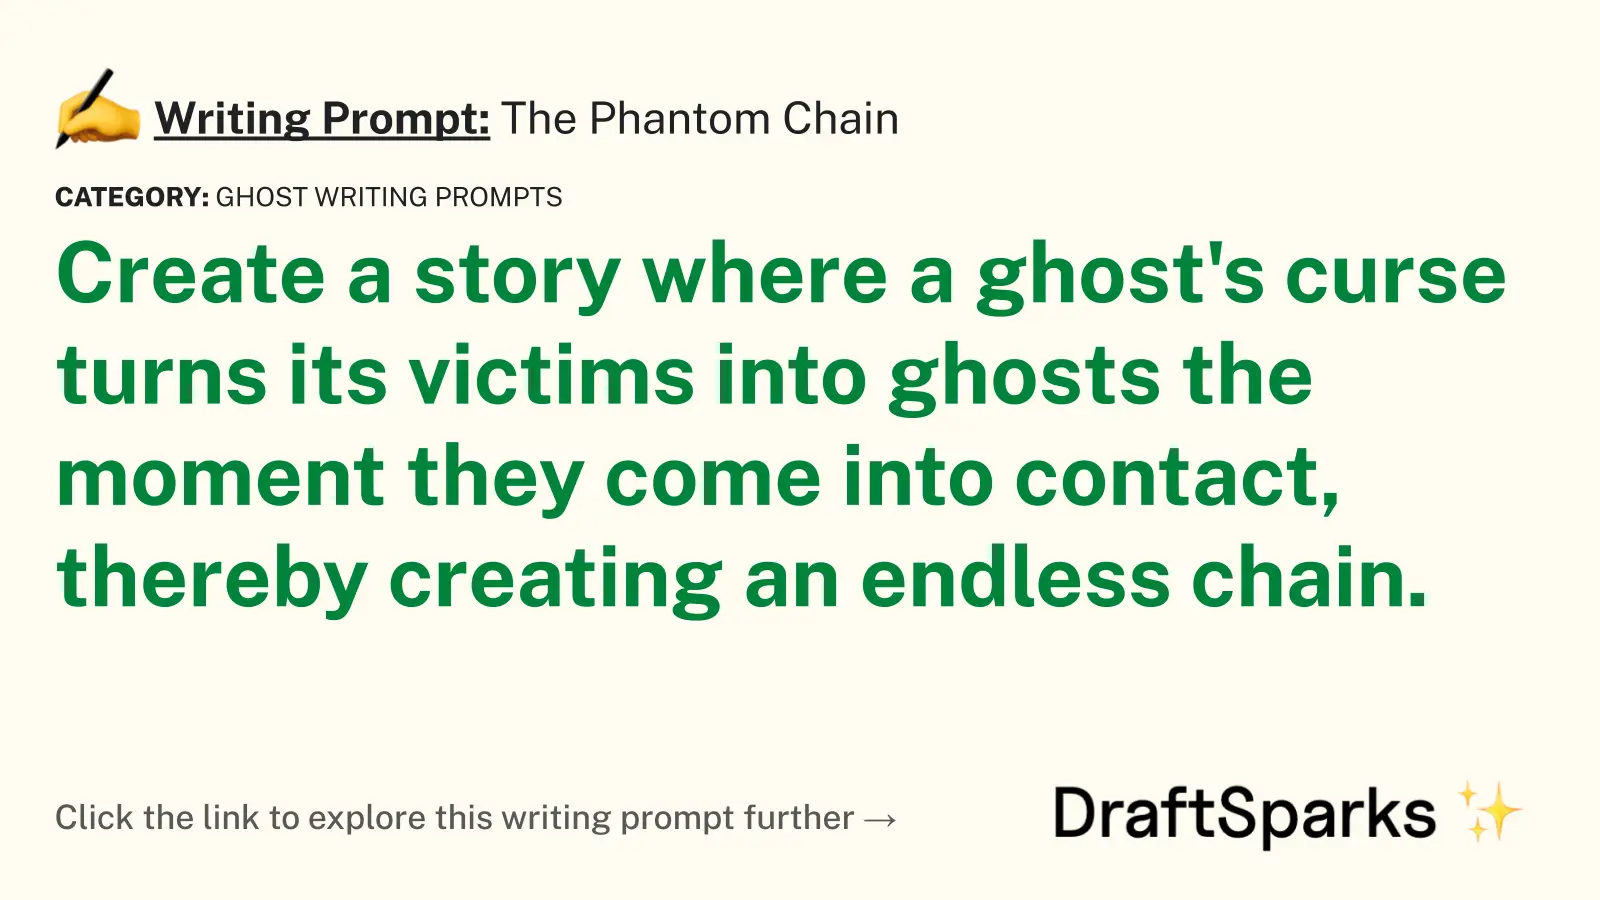 The Phantom Chain